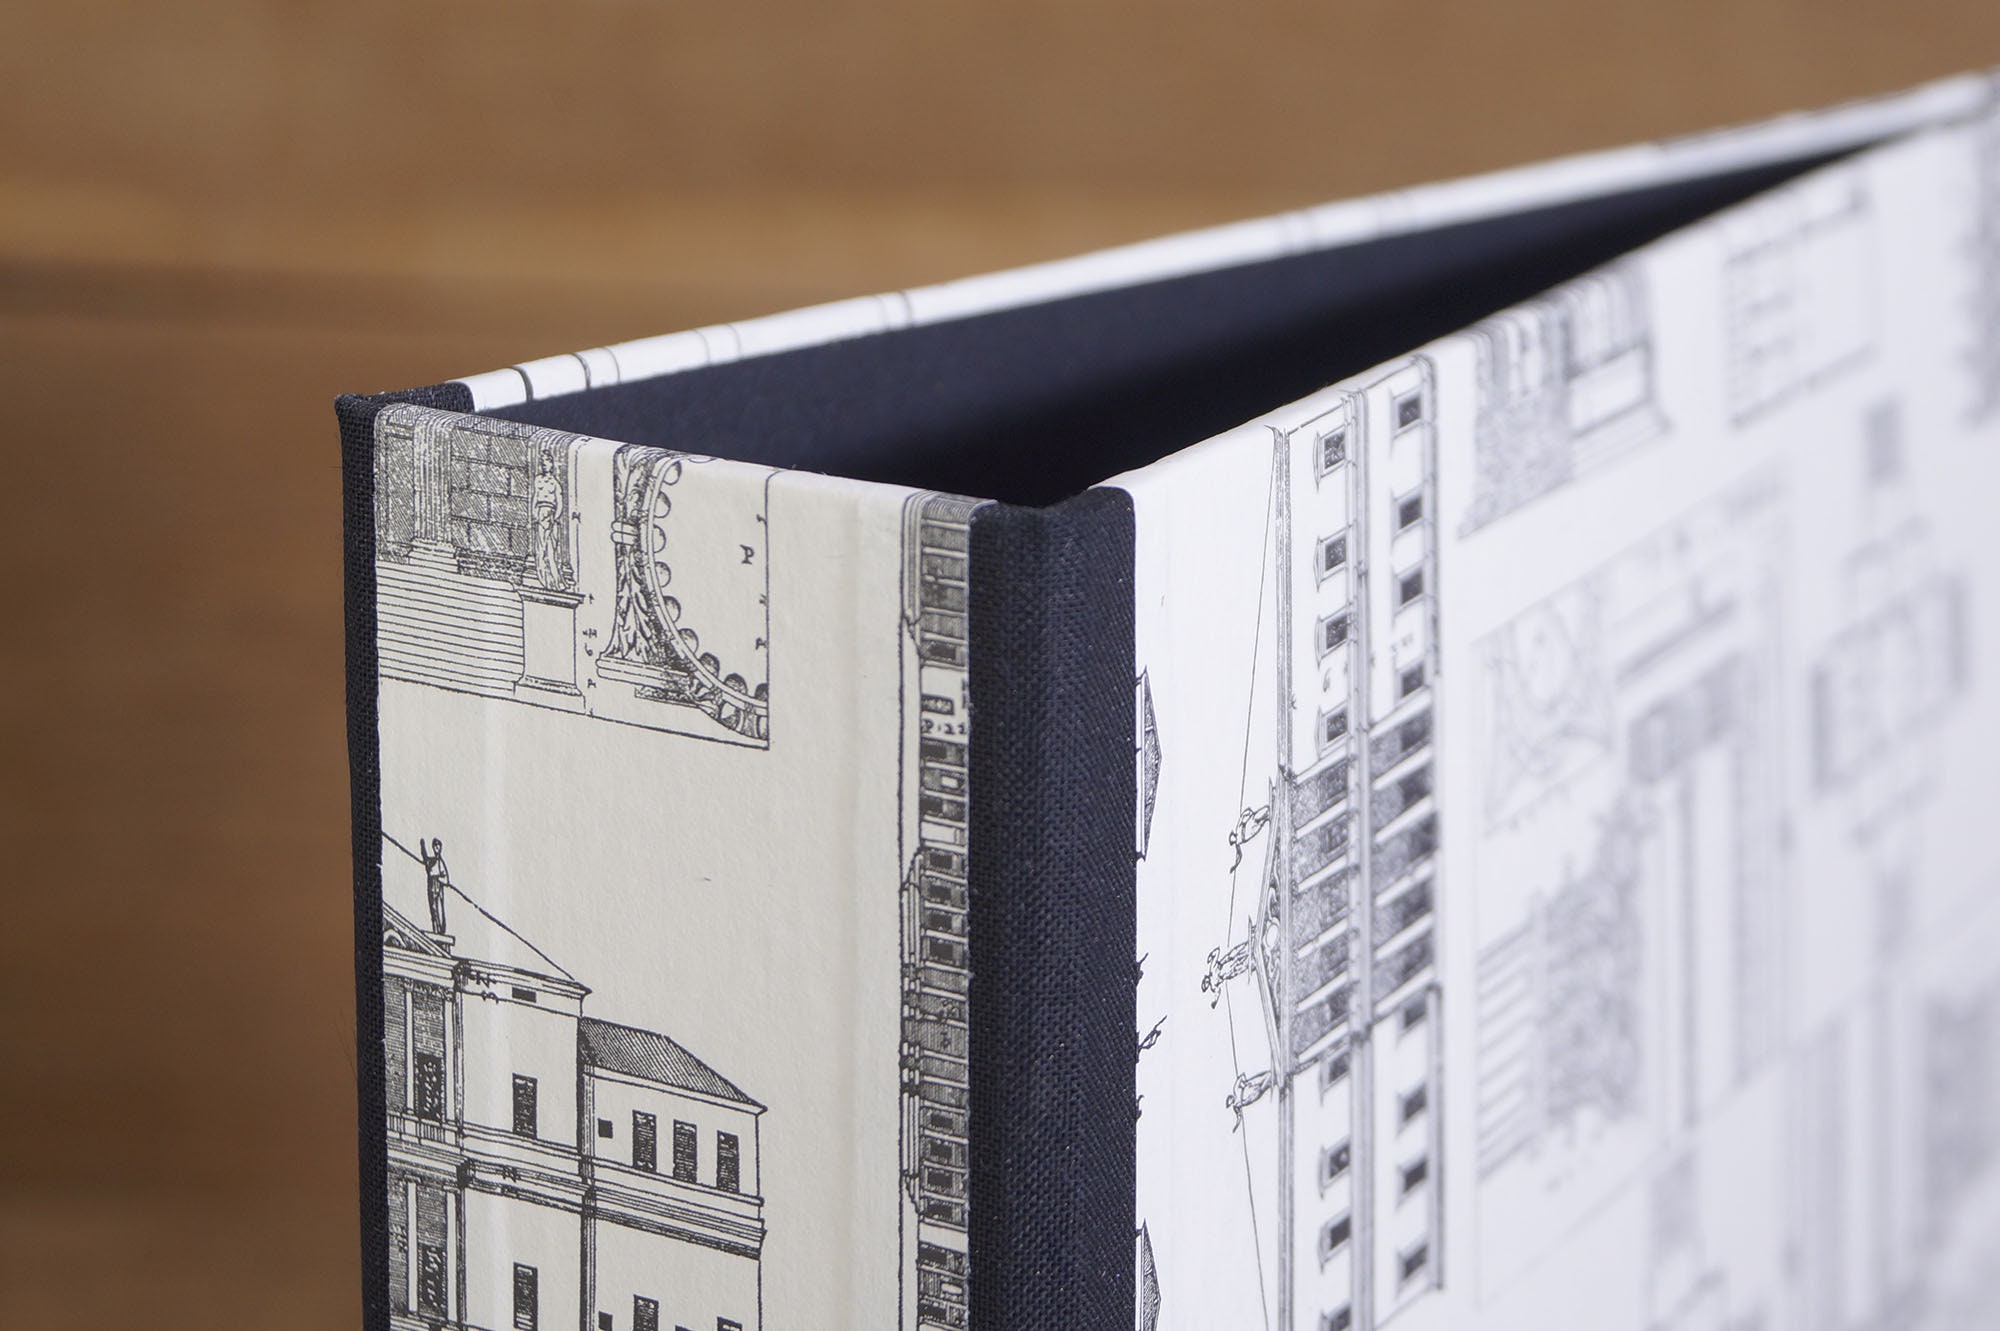 11x17 LANDSCAPE Glossy White Portfolio Acrylic Elegant Modern Folder for  Student Photographer Architect Graphic Designer Portfolio Case 